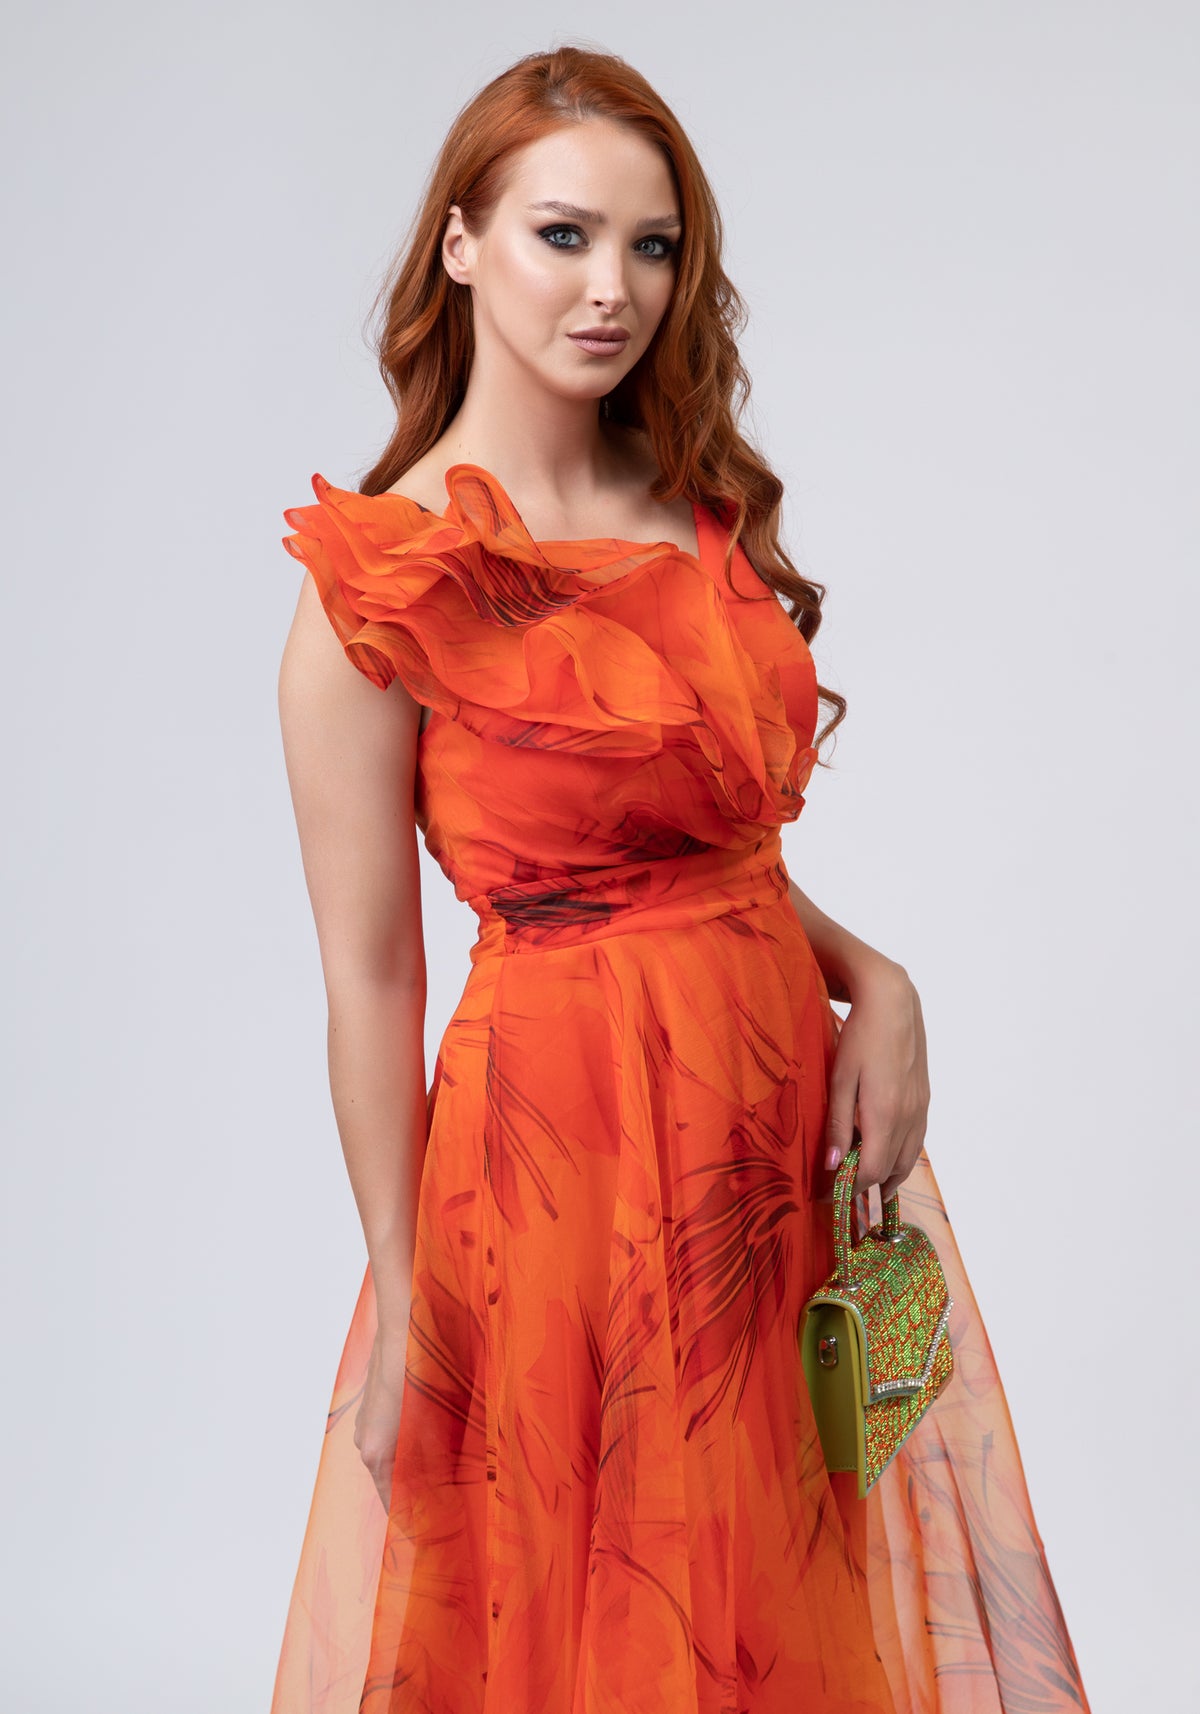 Short orange dress